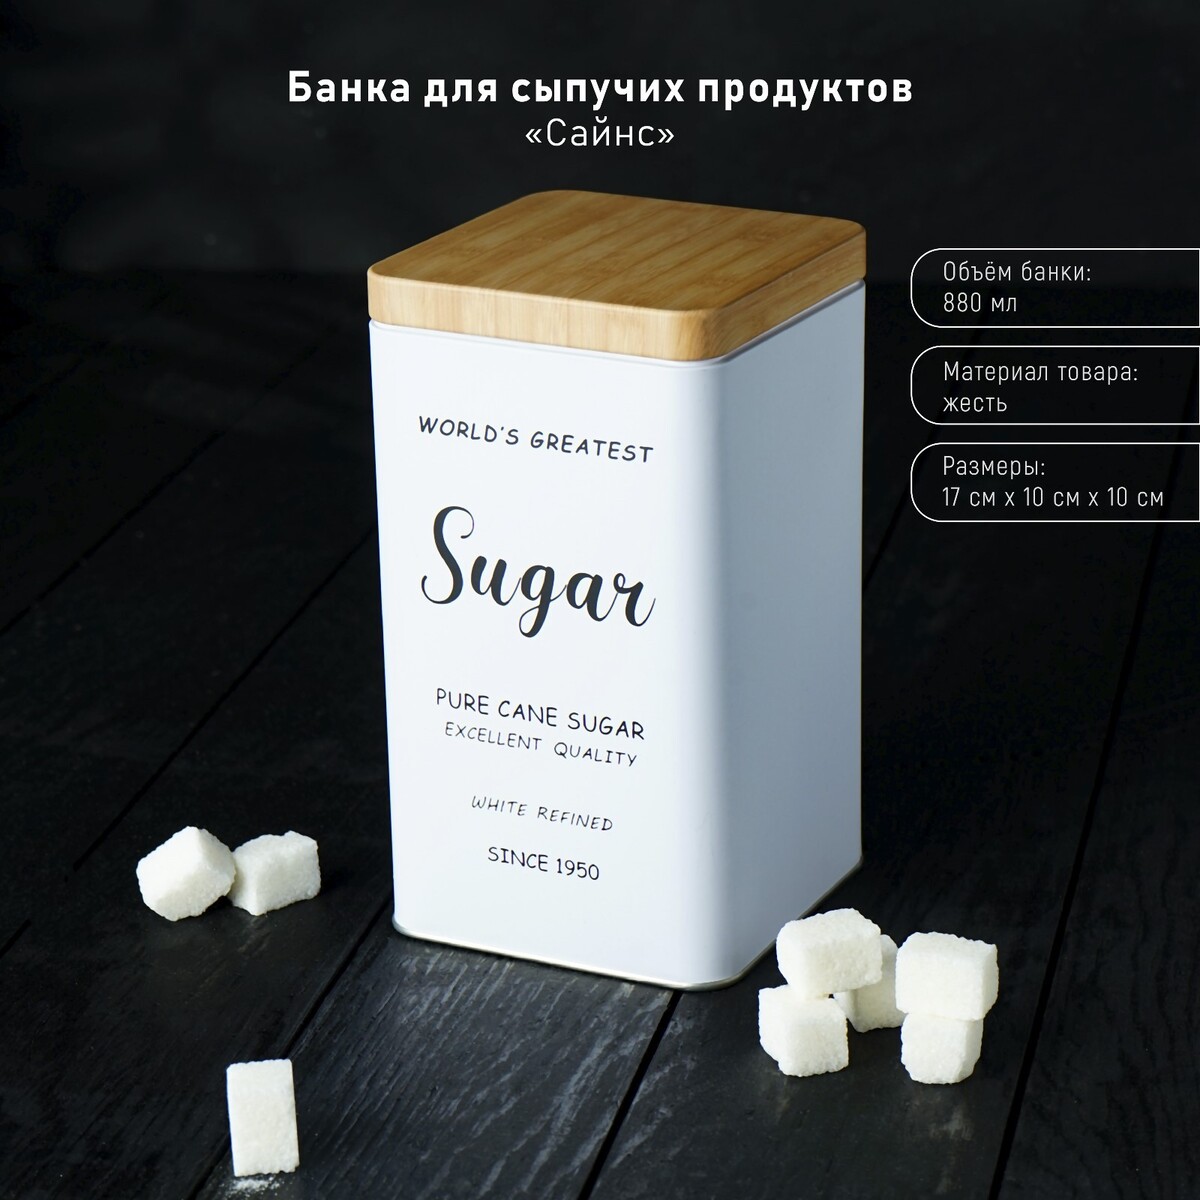 Банка для сыпучих продуктов (сахар) банка для сыпучих продуктов сахар lifestyle 11×11×15 5 см